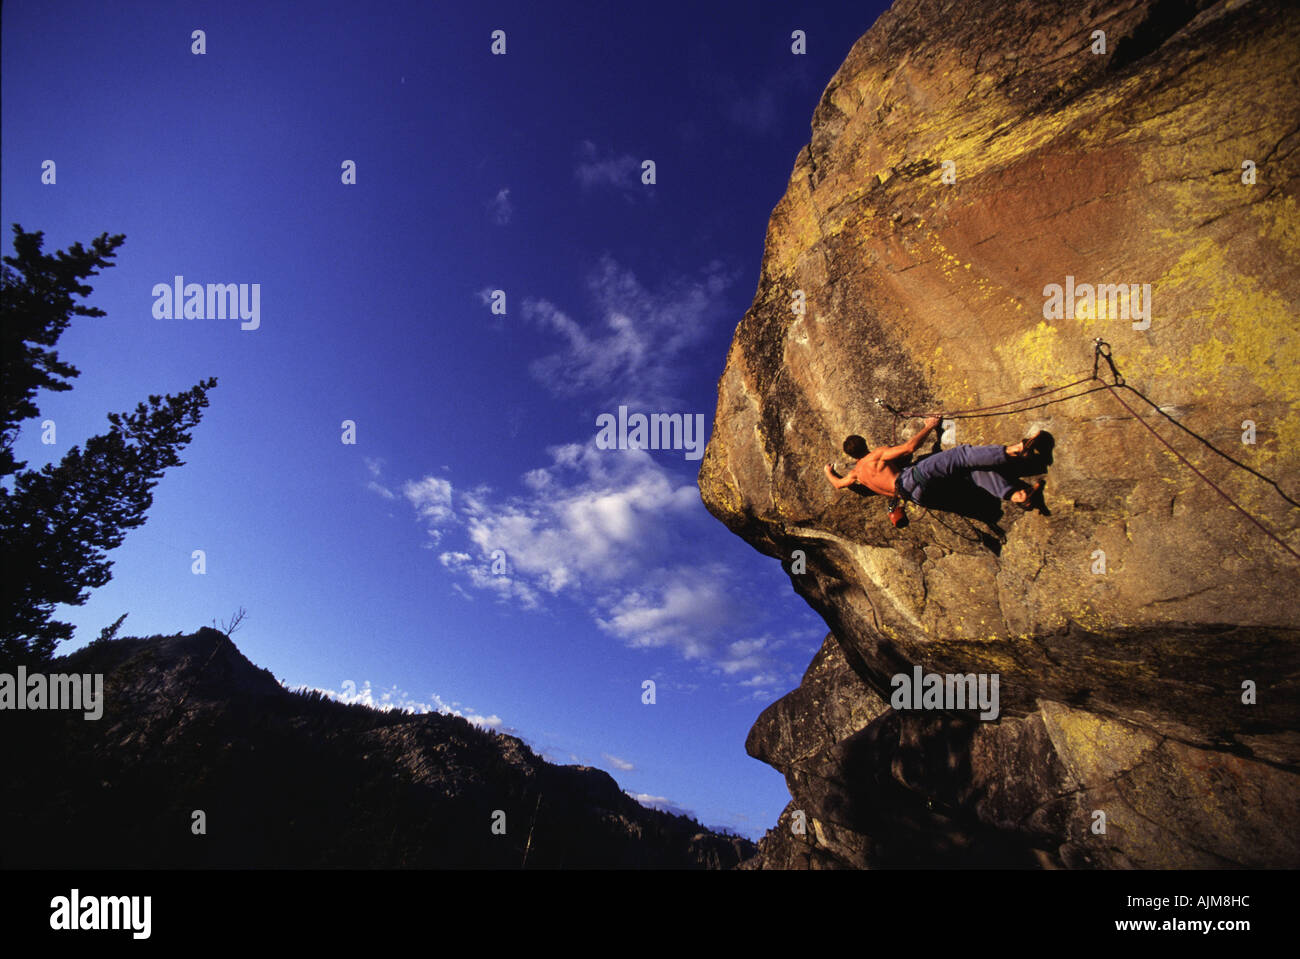 A man rock climbing Short Subject at Donner Summit CA Stock Photo